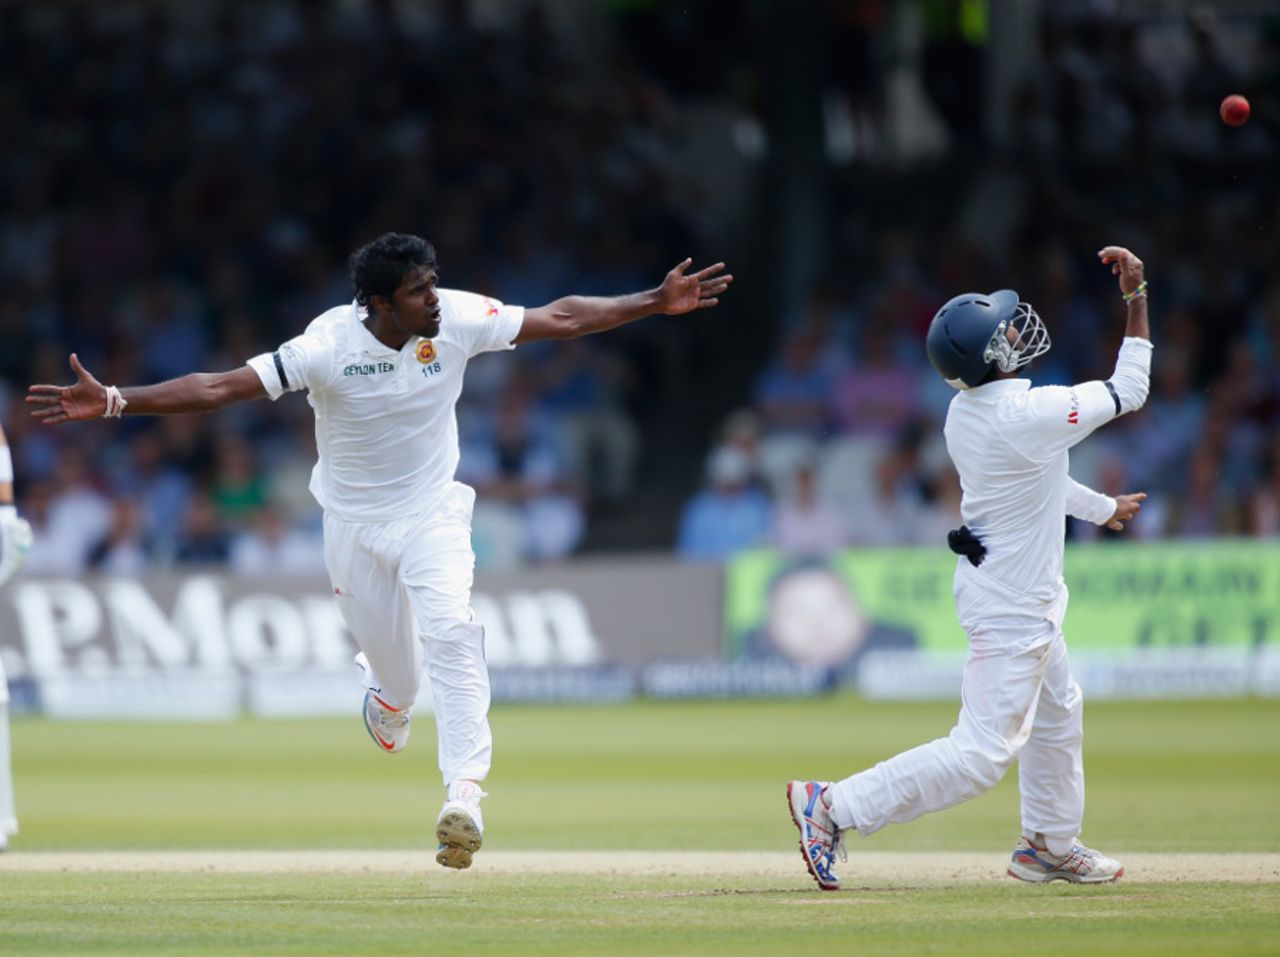 Shaminda Eranga scored some problems with the short ball, England v Sri Lanka, 1st Investec Test, Lord's, 2nd day, June 13, 2014